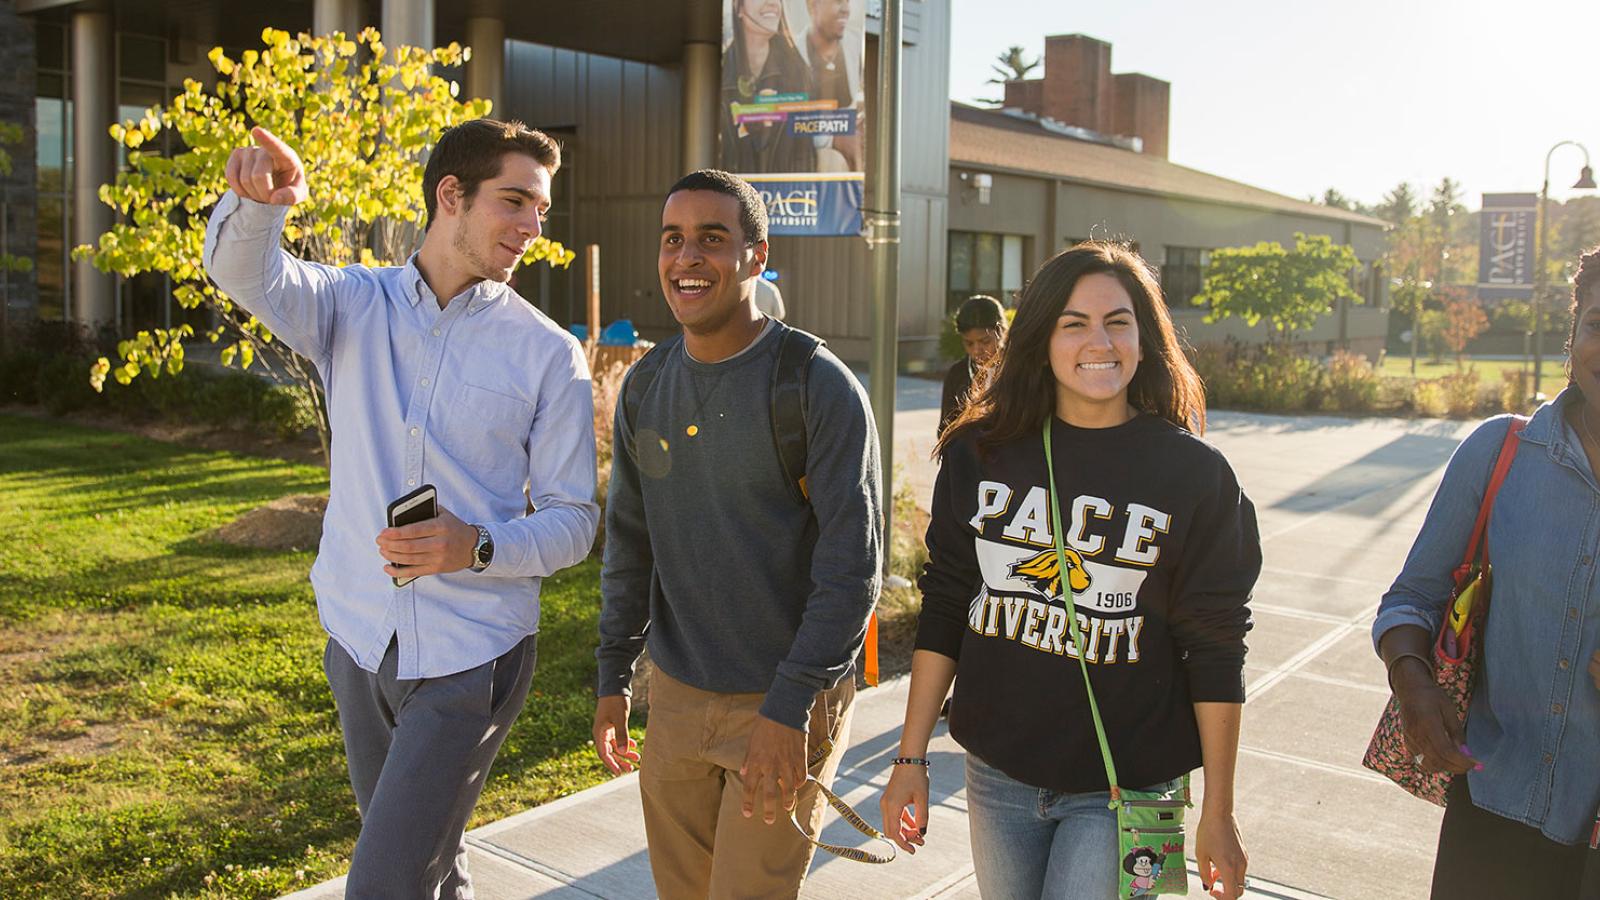 Students walking around the PLV campus.